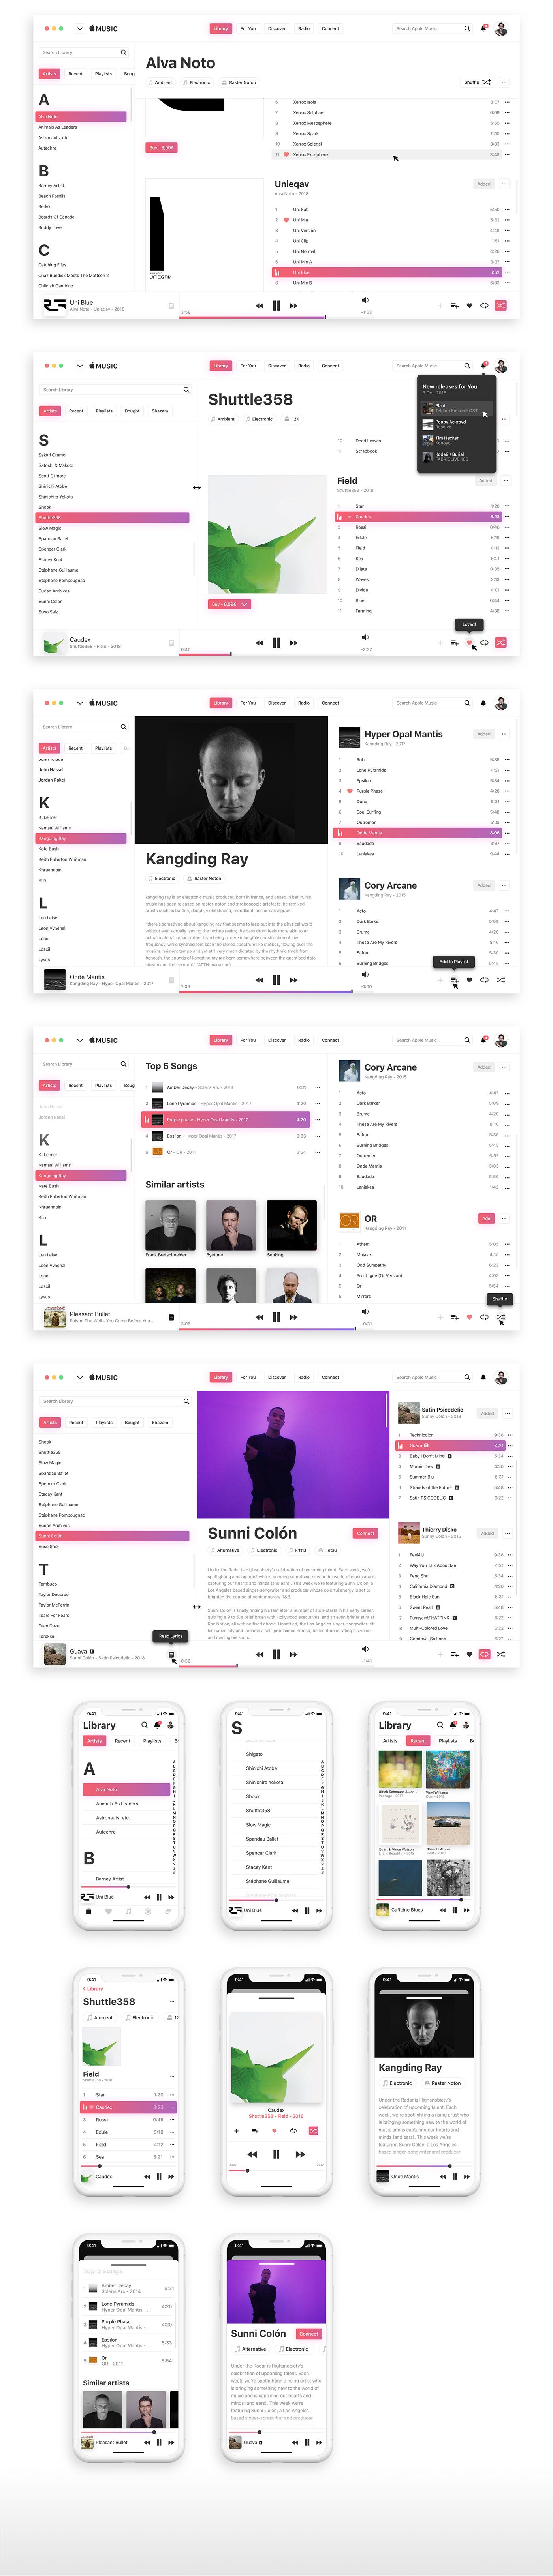 Apple Music: A UI/UX Holistic Case Study | by Ann Green | Medium